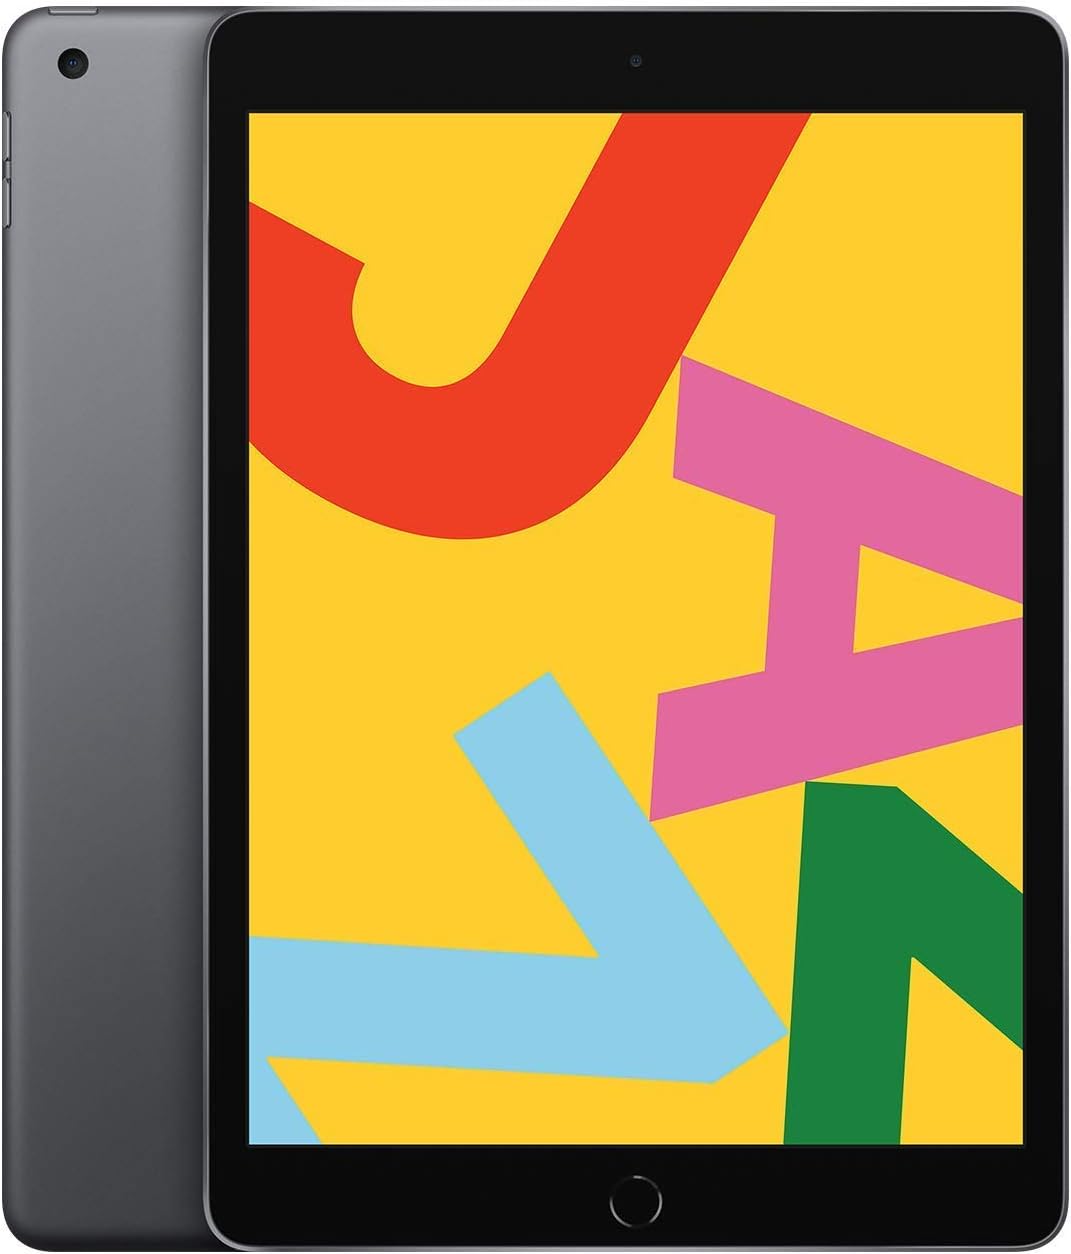 Apple iPad 6th Gen Tablet - Space Grey - Wi-Fi Only - 128GB Storage